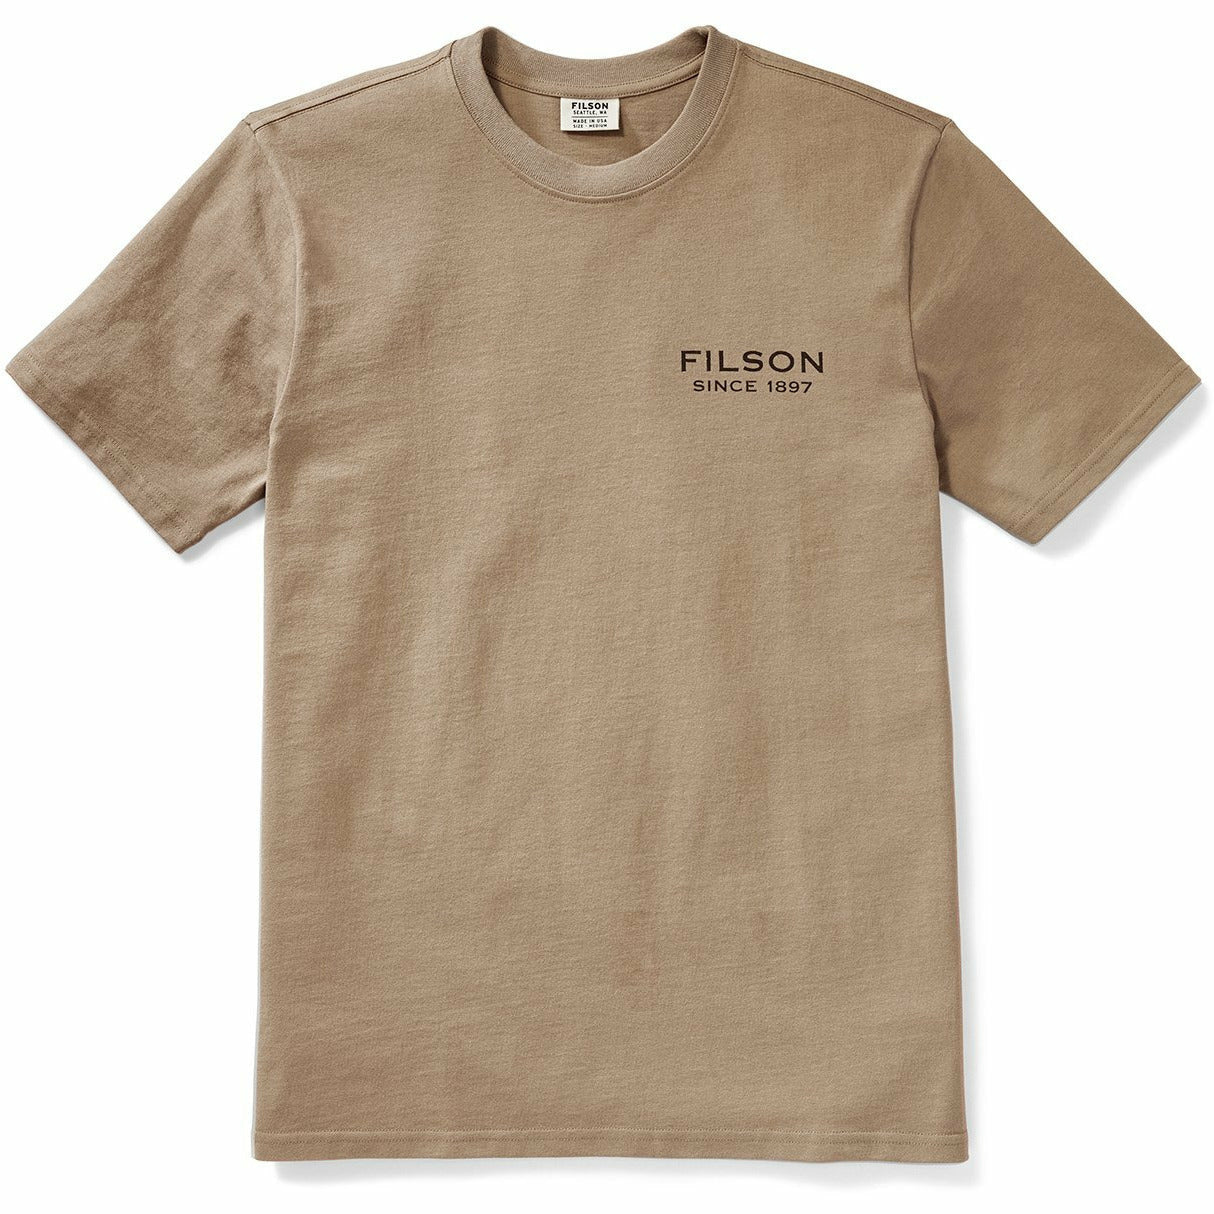 Filson T-Shirt Khaki